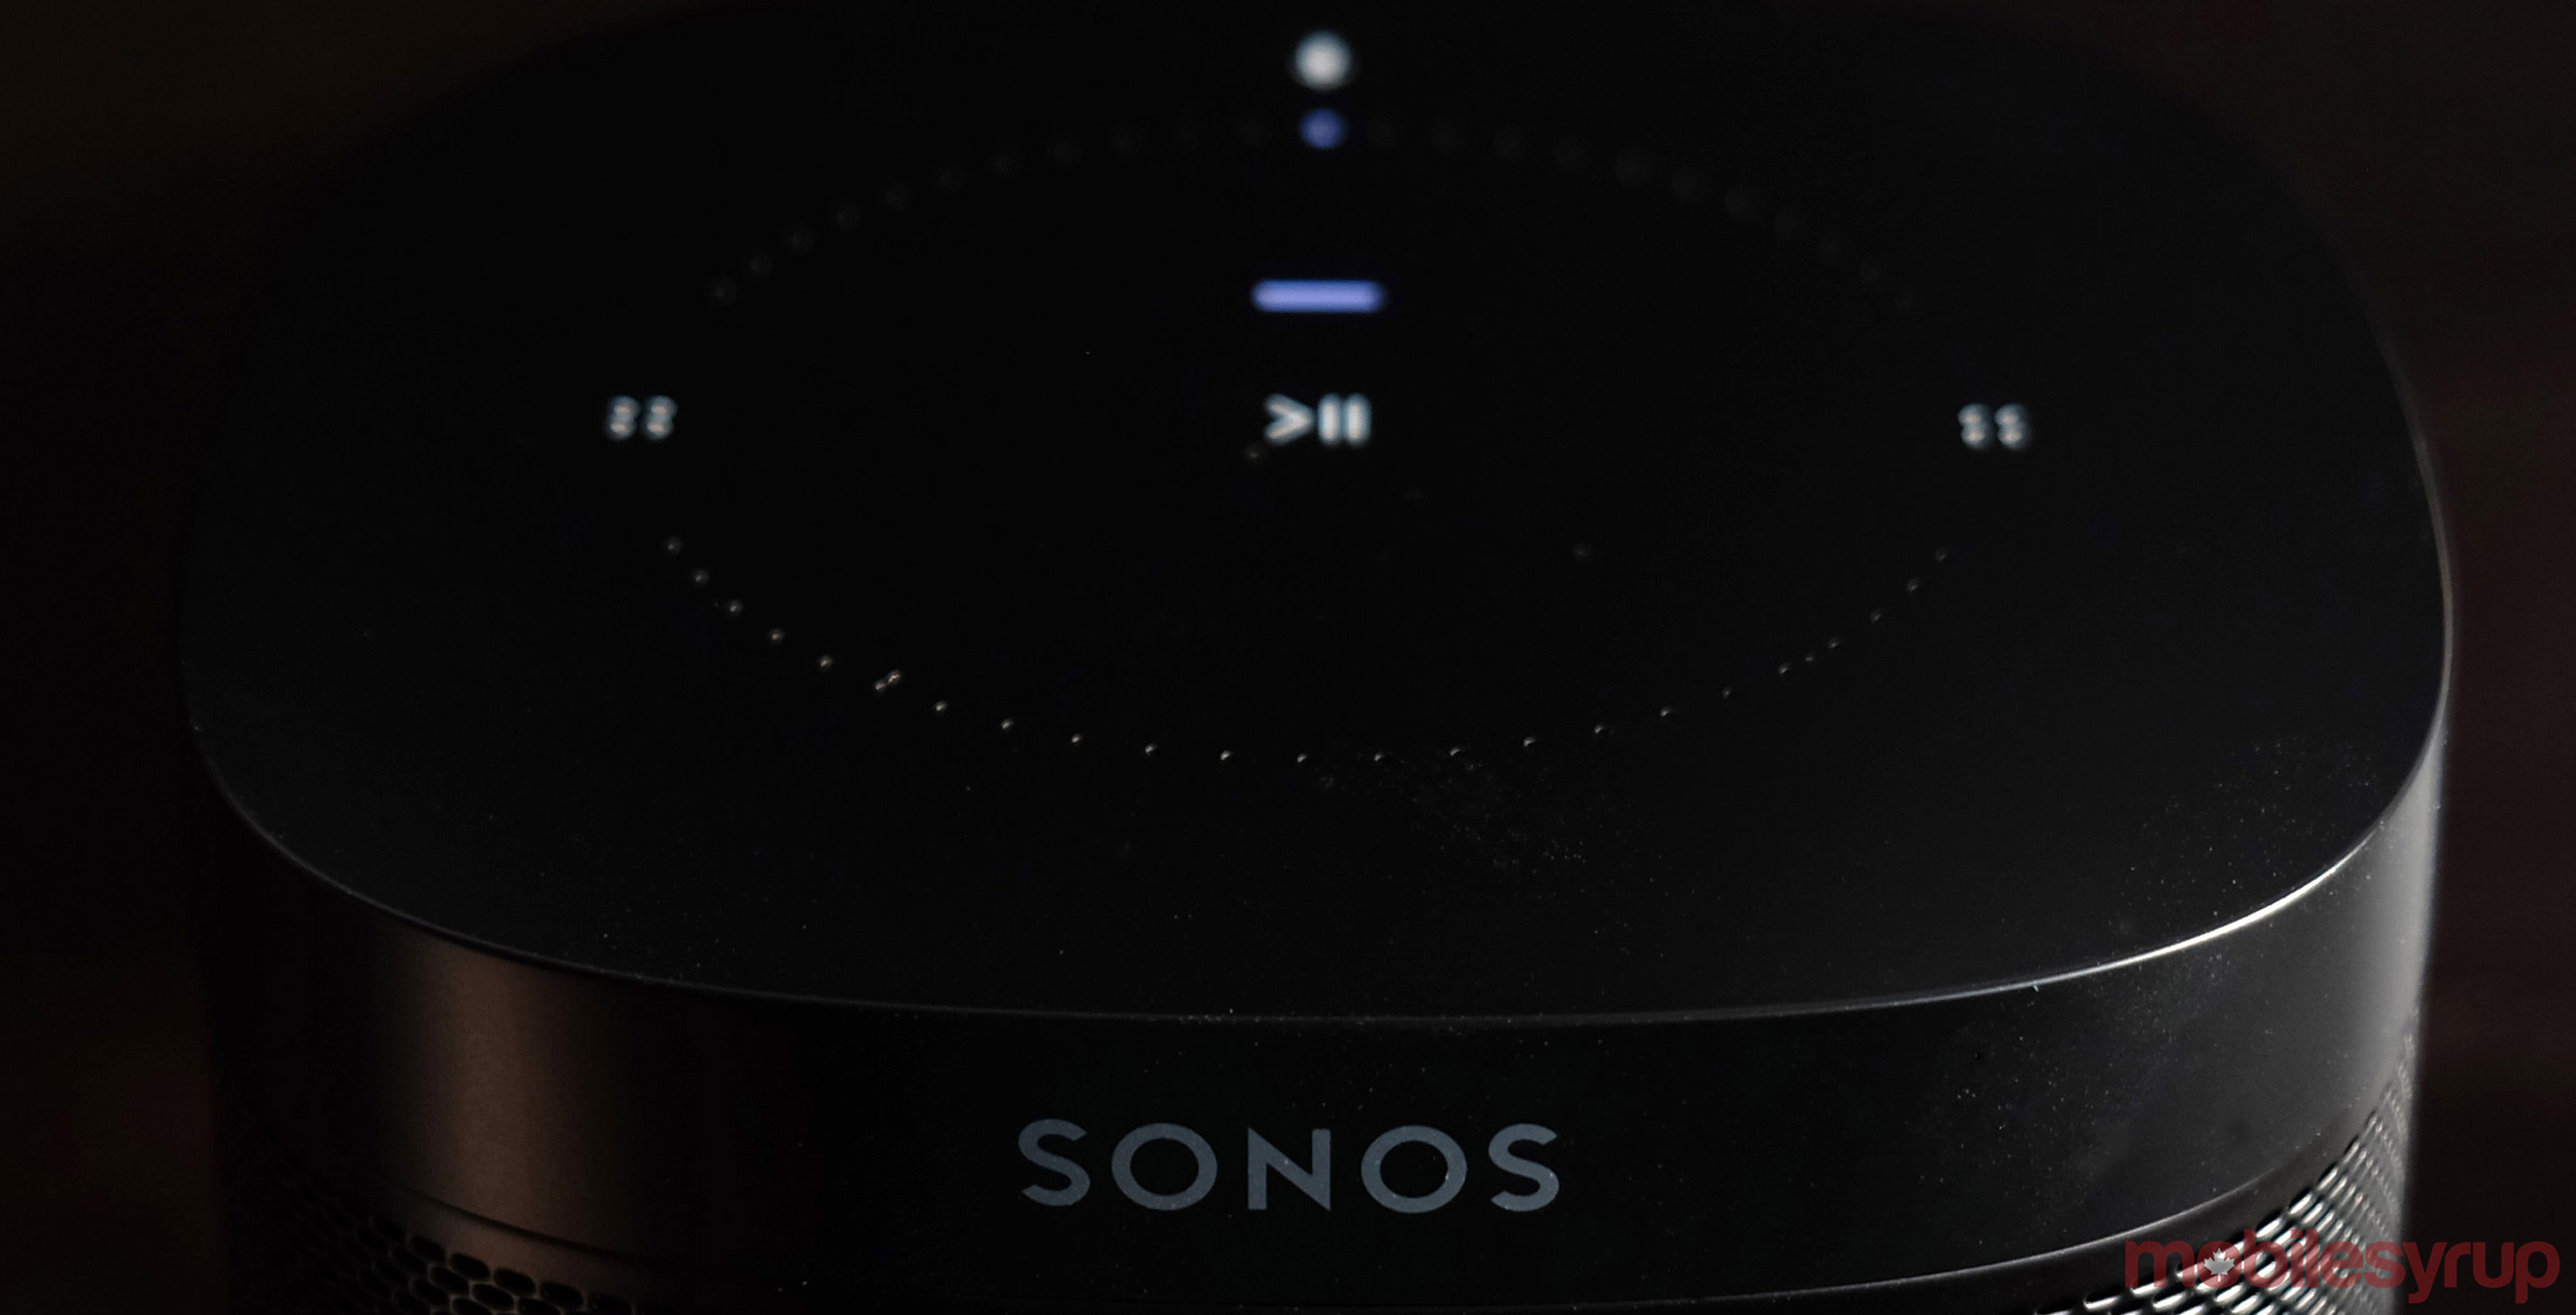 The new Sonos One speaker